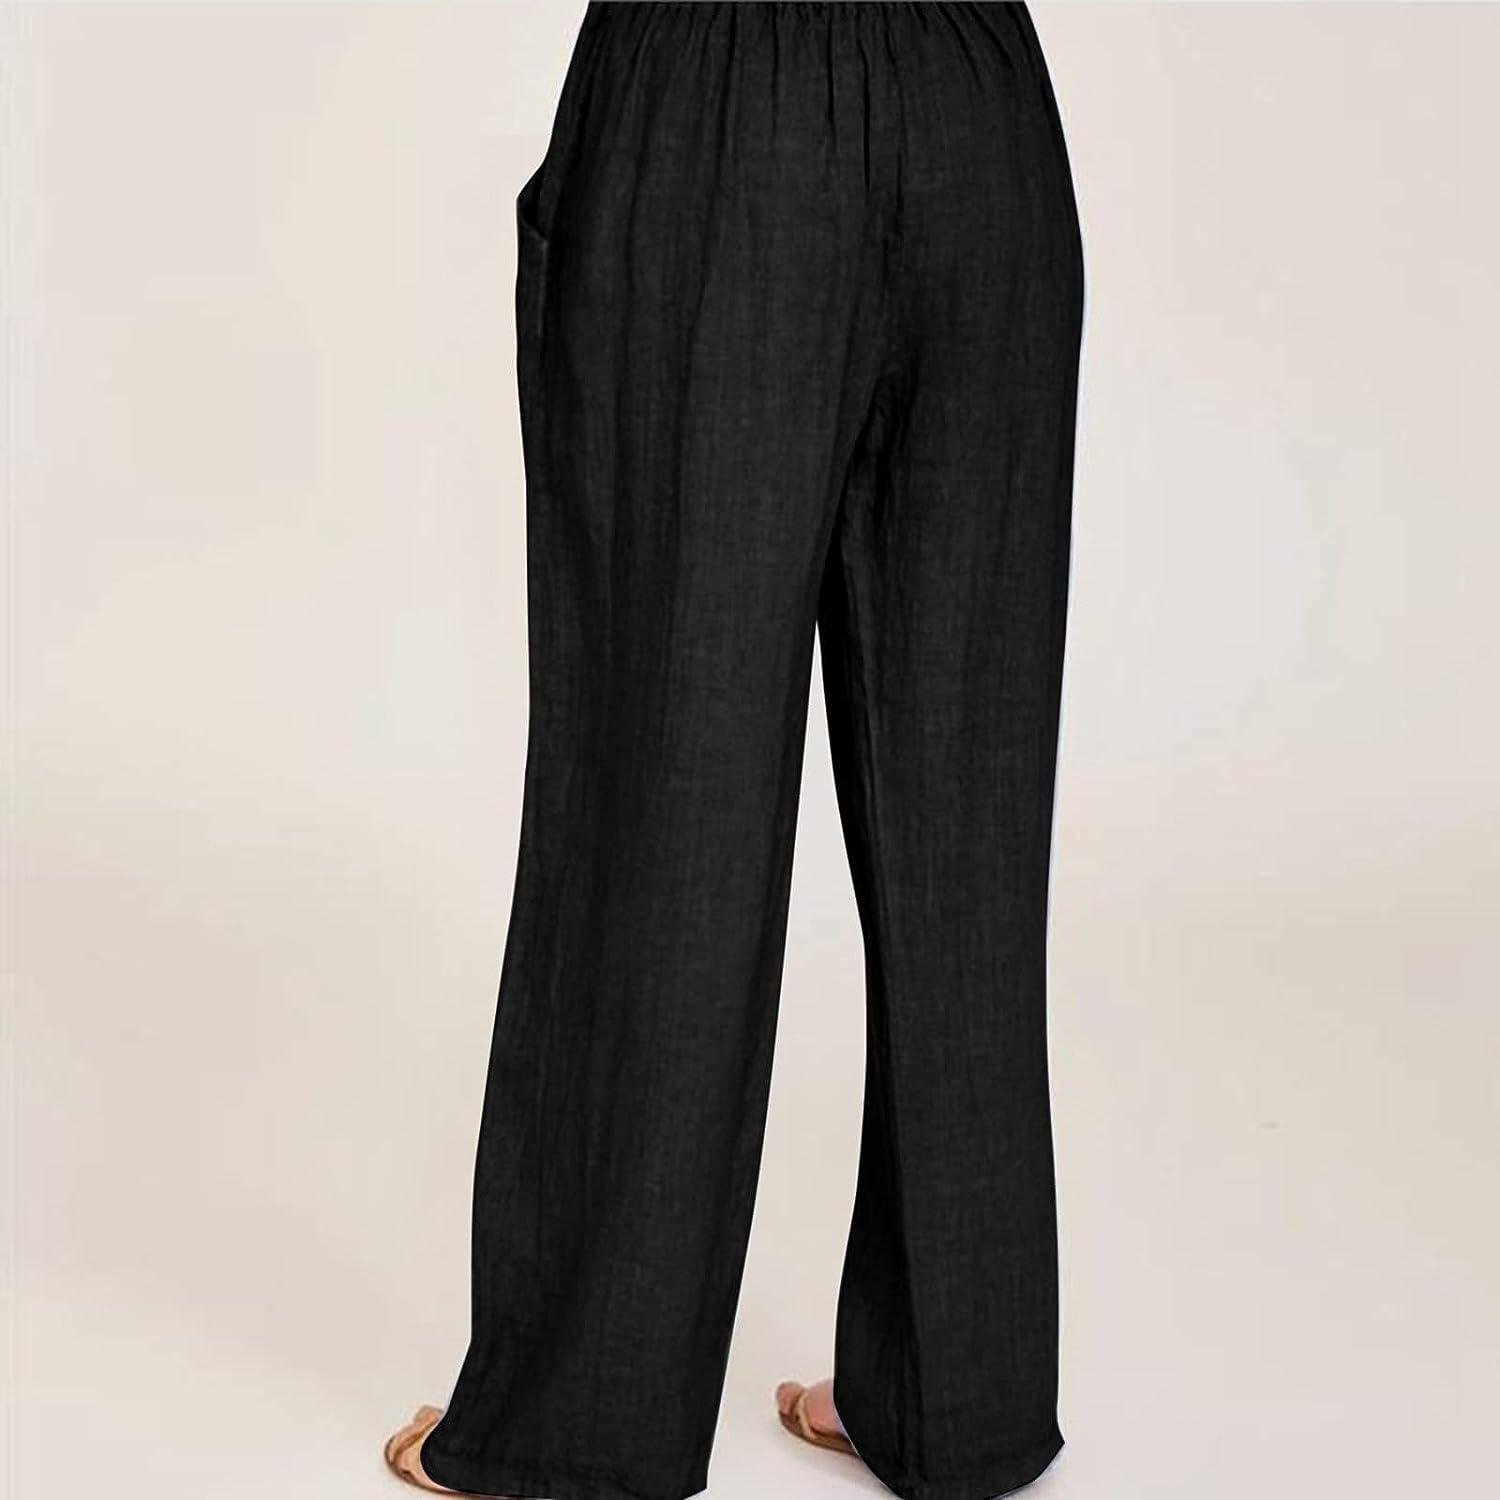 CTRLZS Women's Cotton Linen Palazzo Pants Summer Drawstring High Waist Plus  Size Casual Loose Wide Leg Beach Trousers Pockets B-black X-Large